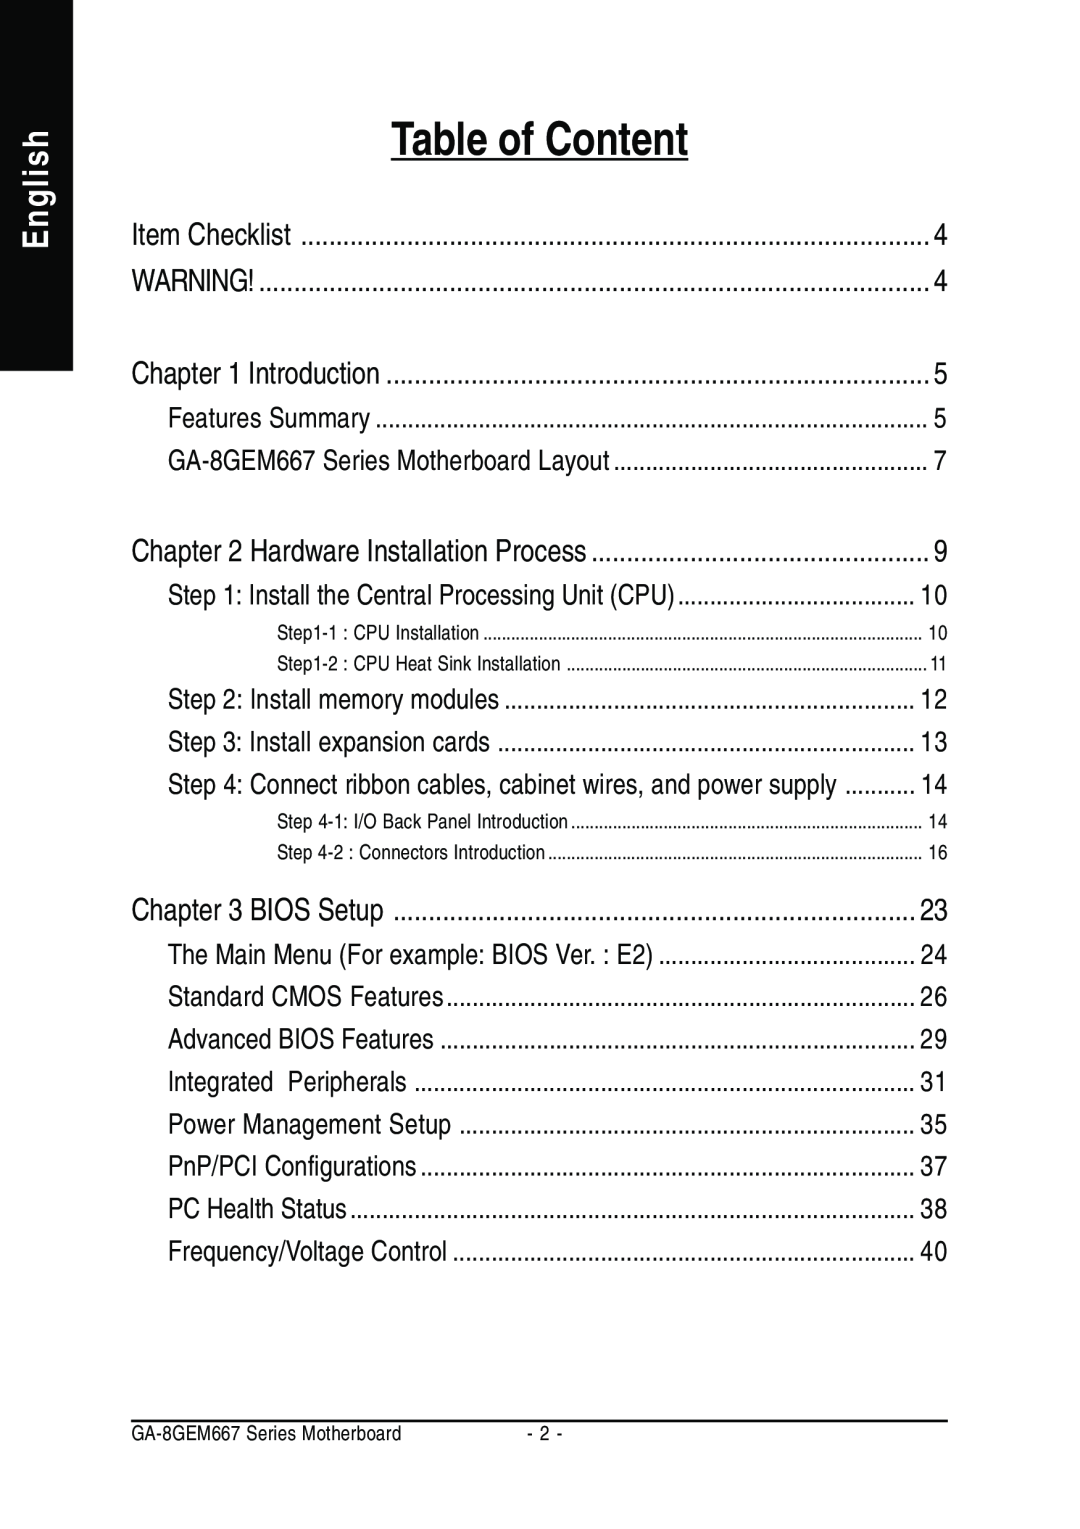 Gigabyte GA-8GEM667 manual English, Table of Content 